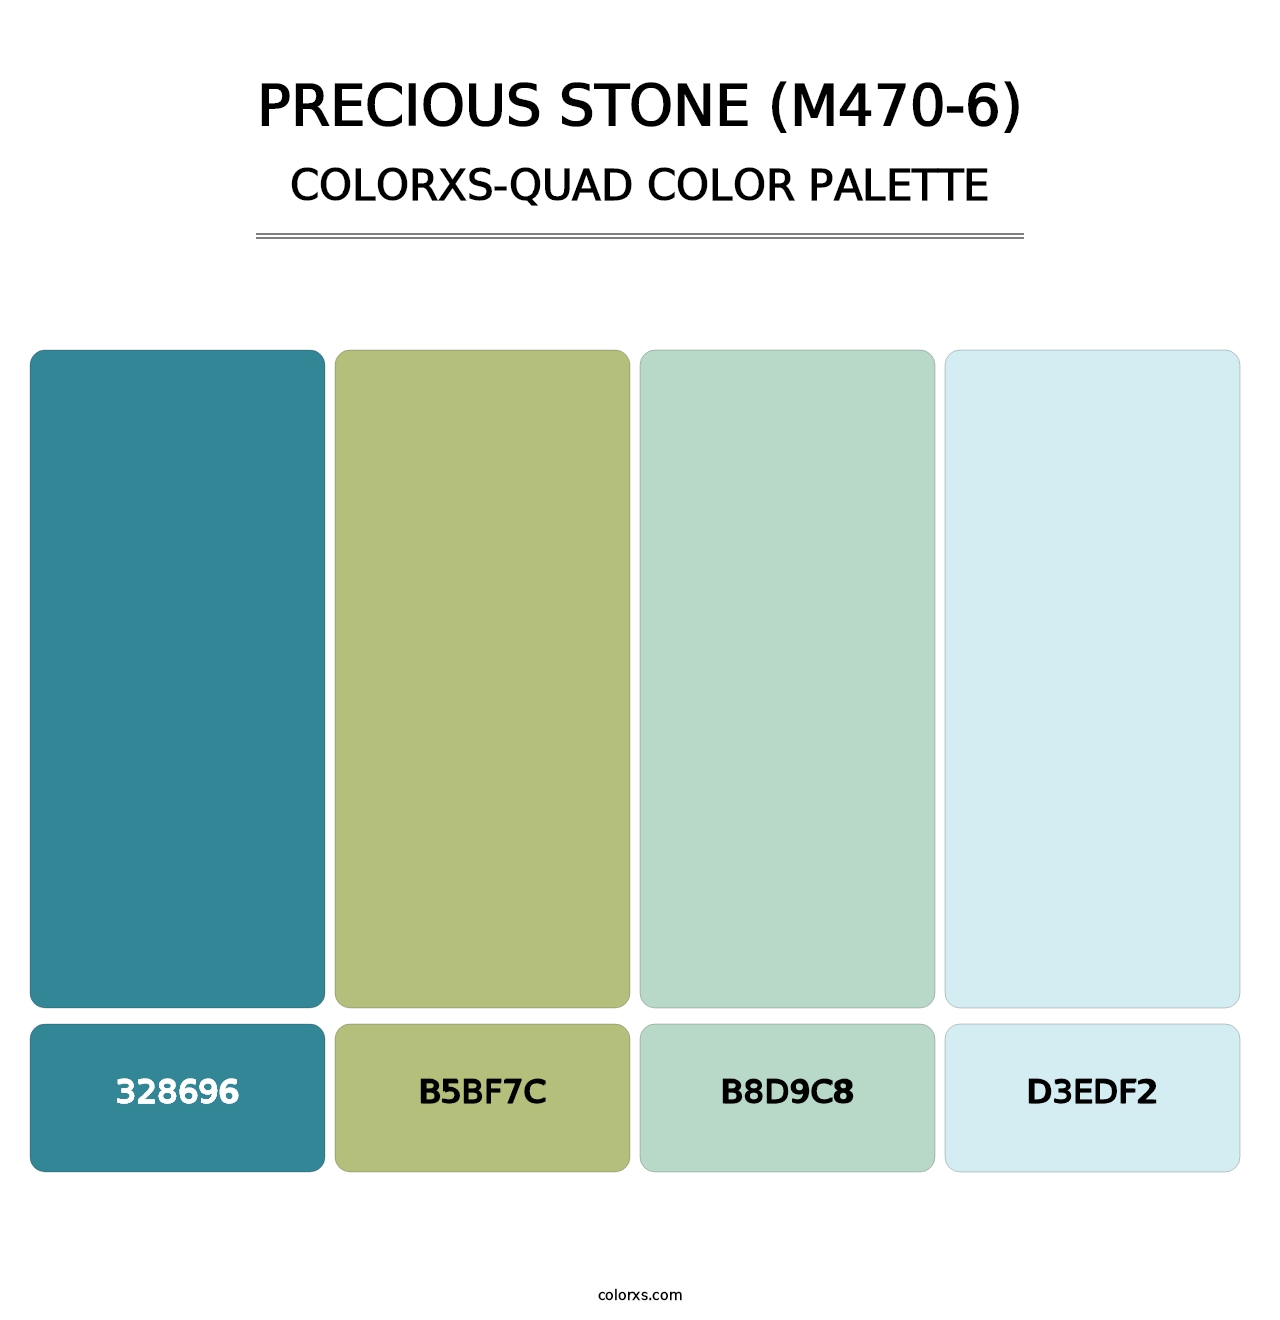 Precious Stone (M470-6) - Colorxs Quad Palette